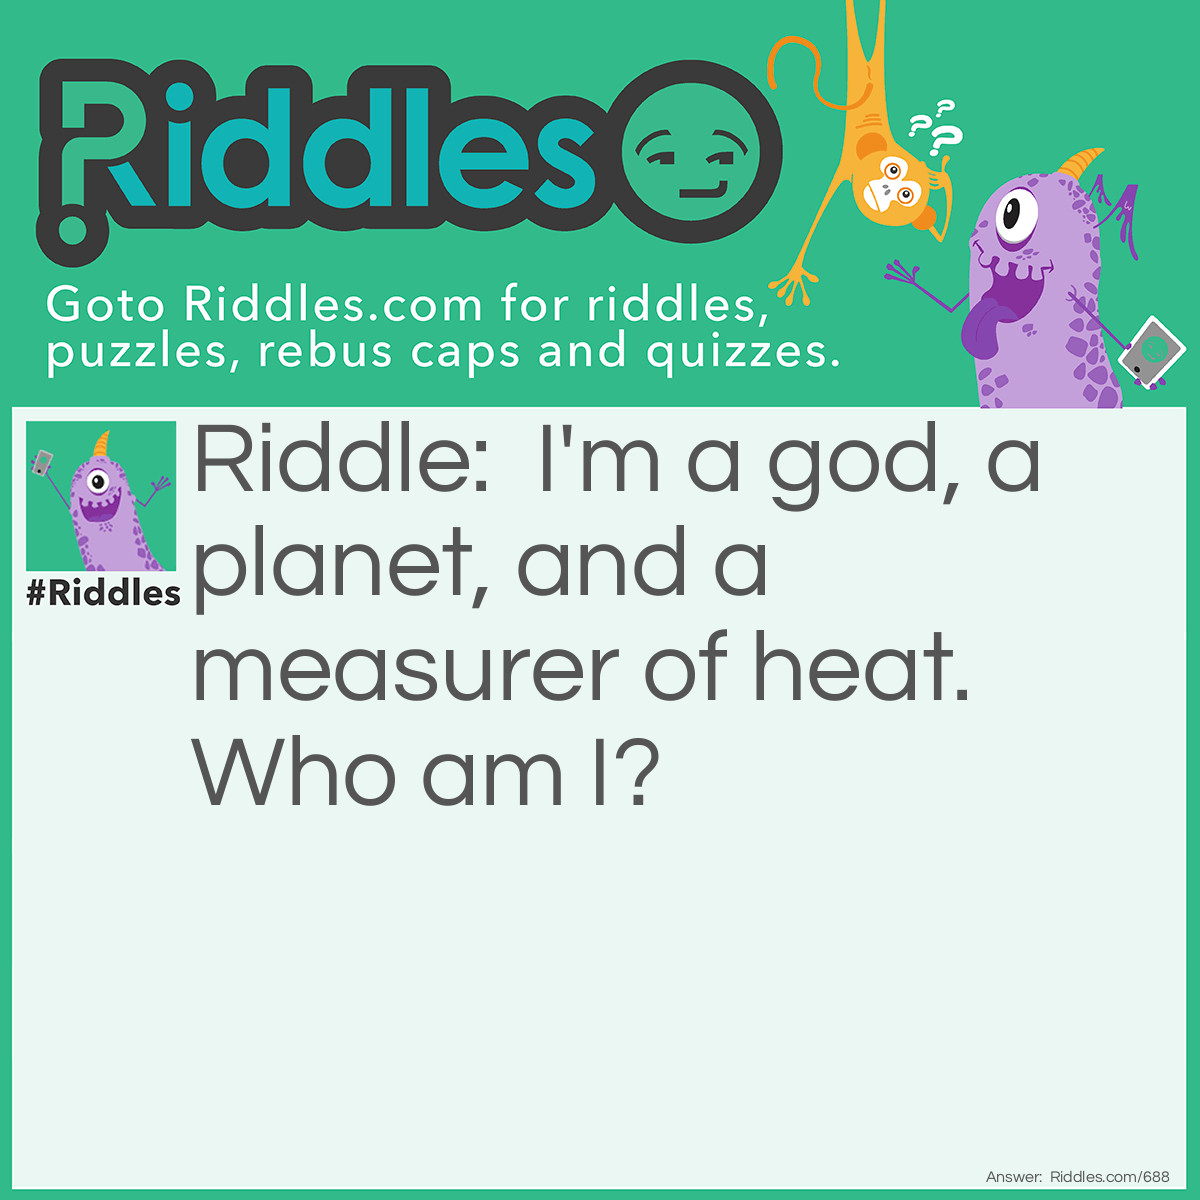 Riddle: I'm a god, a planet, and a measurer of heat. 
Who am I? Answer: Mercury.